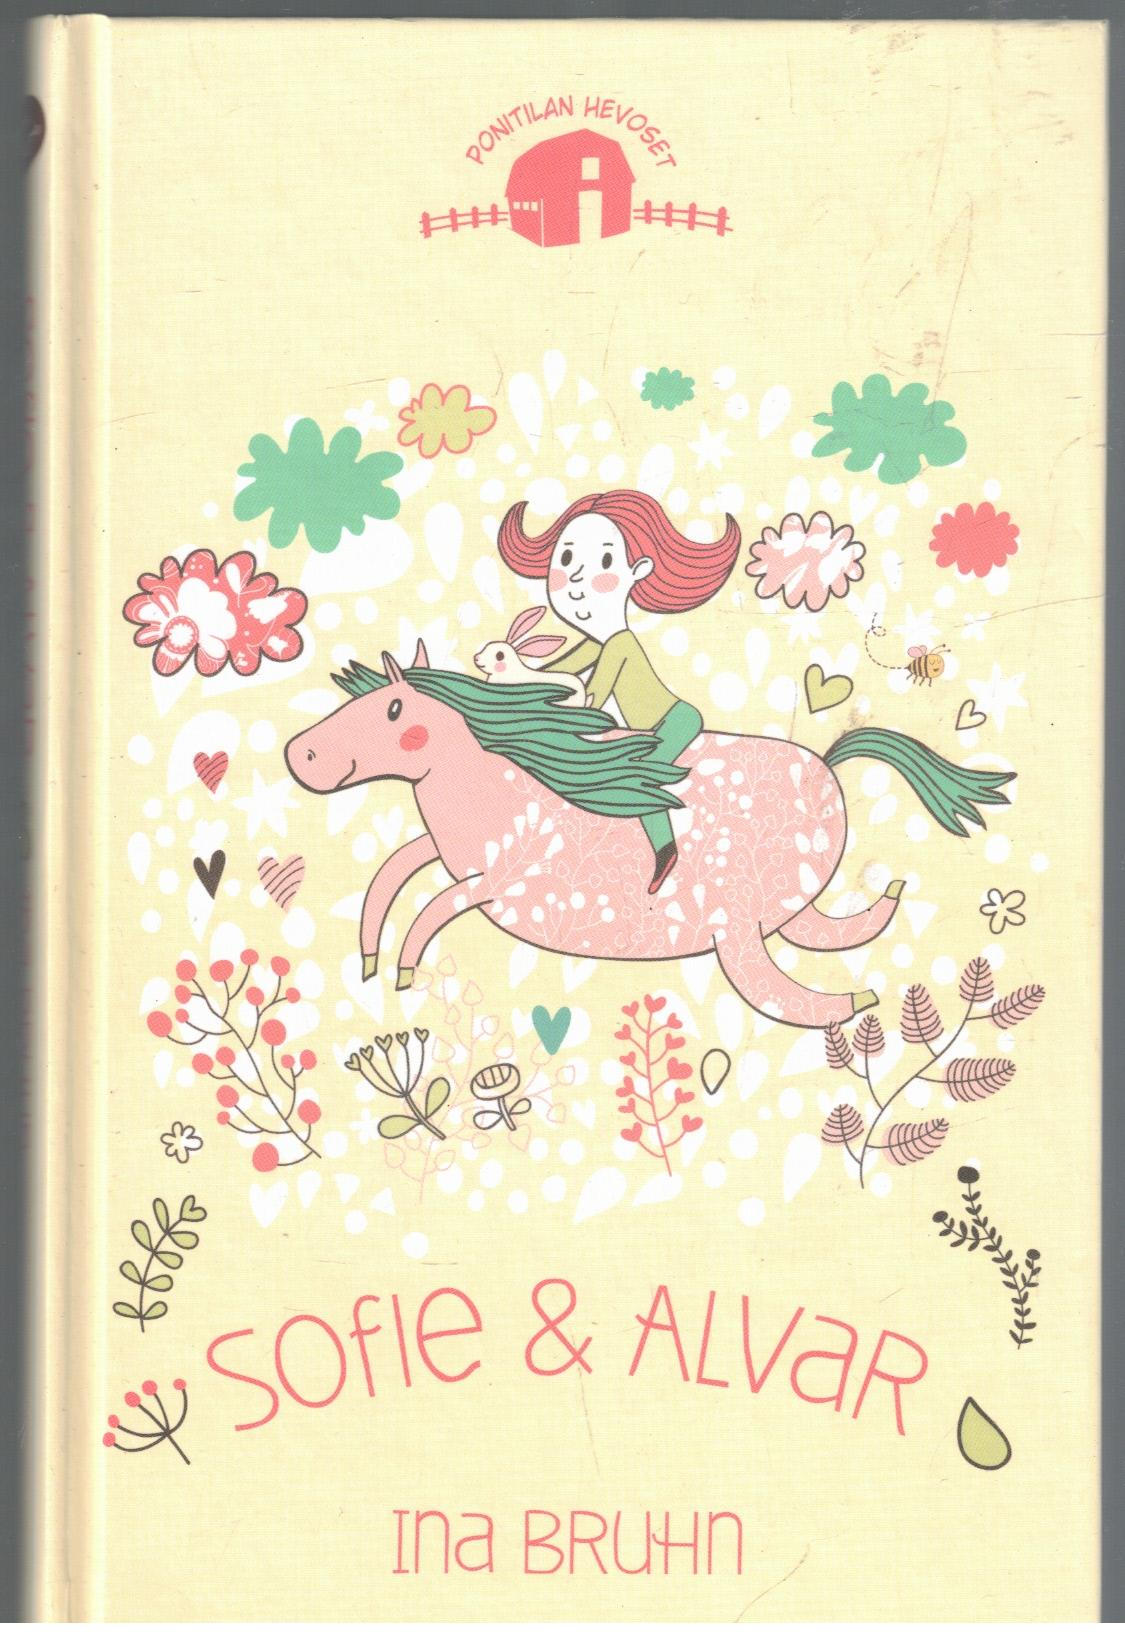 Sofie & Alvar - Ponitilan hevoset